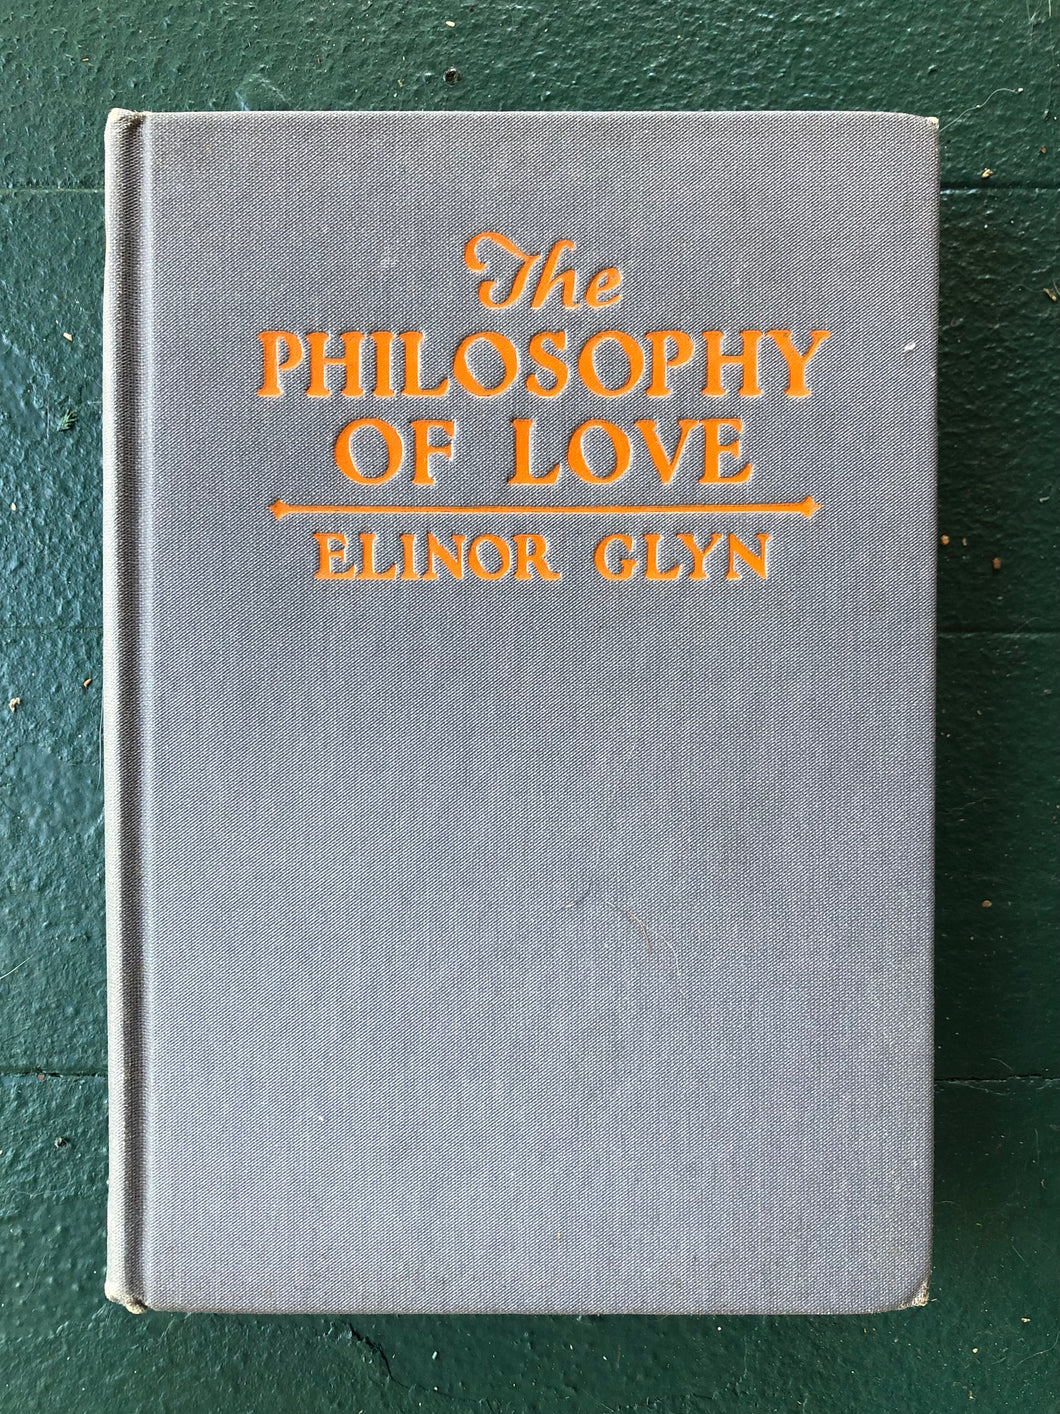 The Philosophy of Love. By Elinor Glyn.